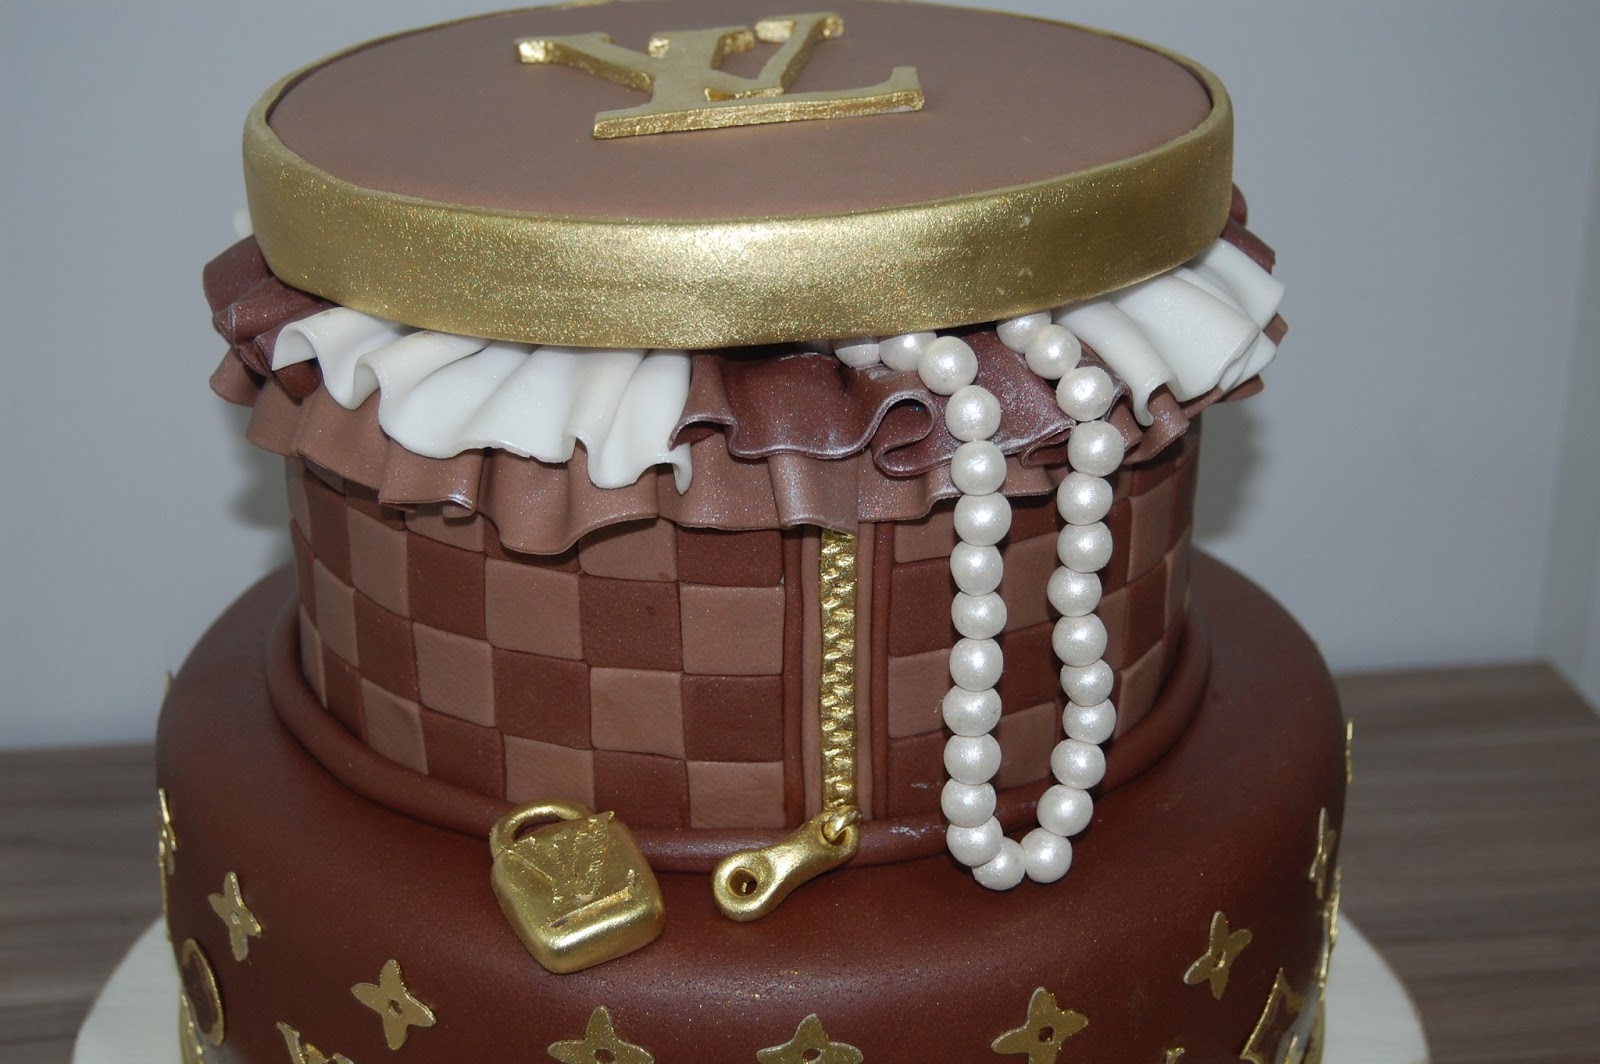 LV Louis Vuitton Cake Luxury 路易威登 款 蛋糕, Food & Drinks, Gift